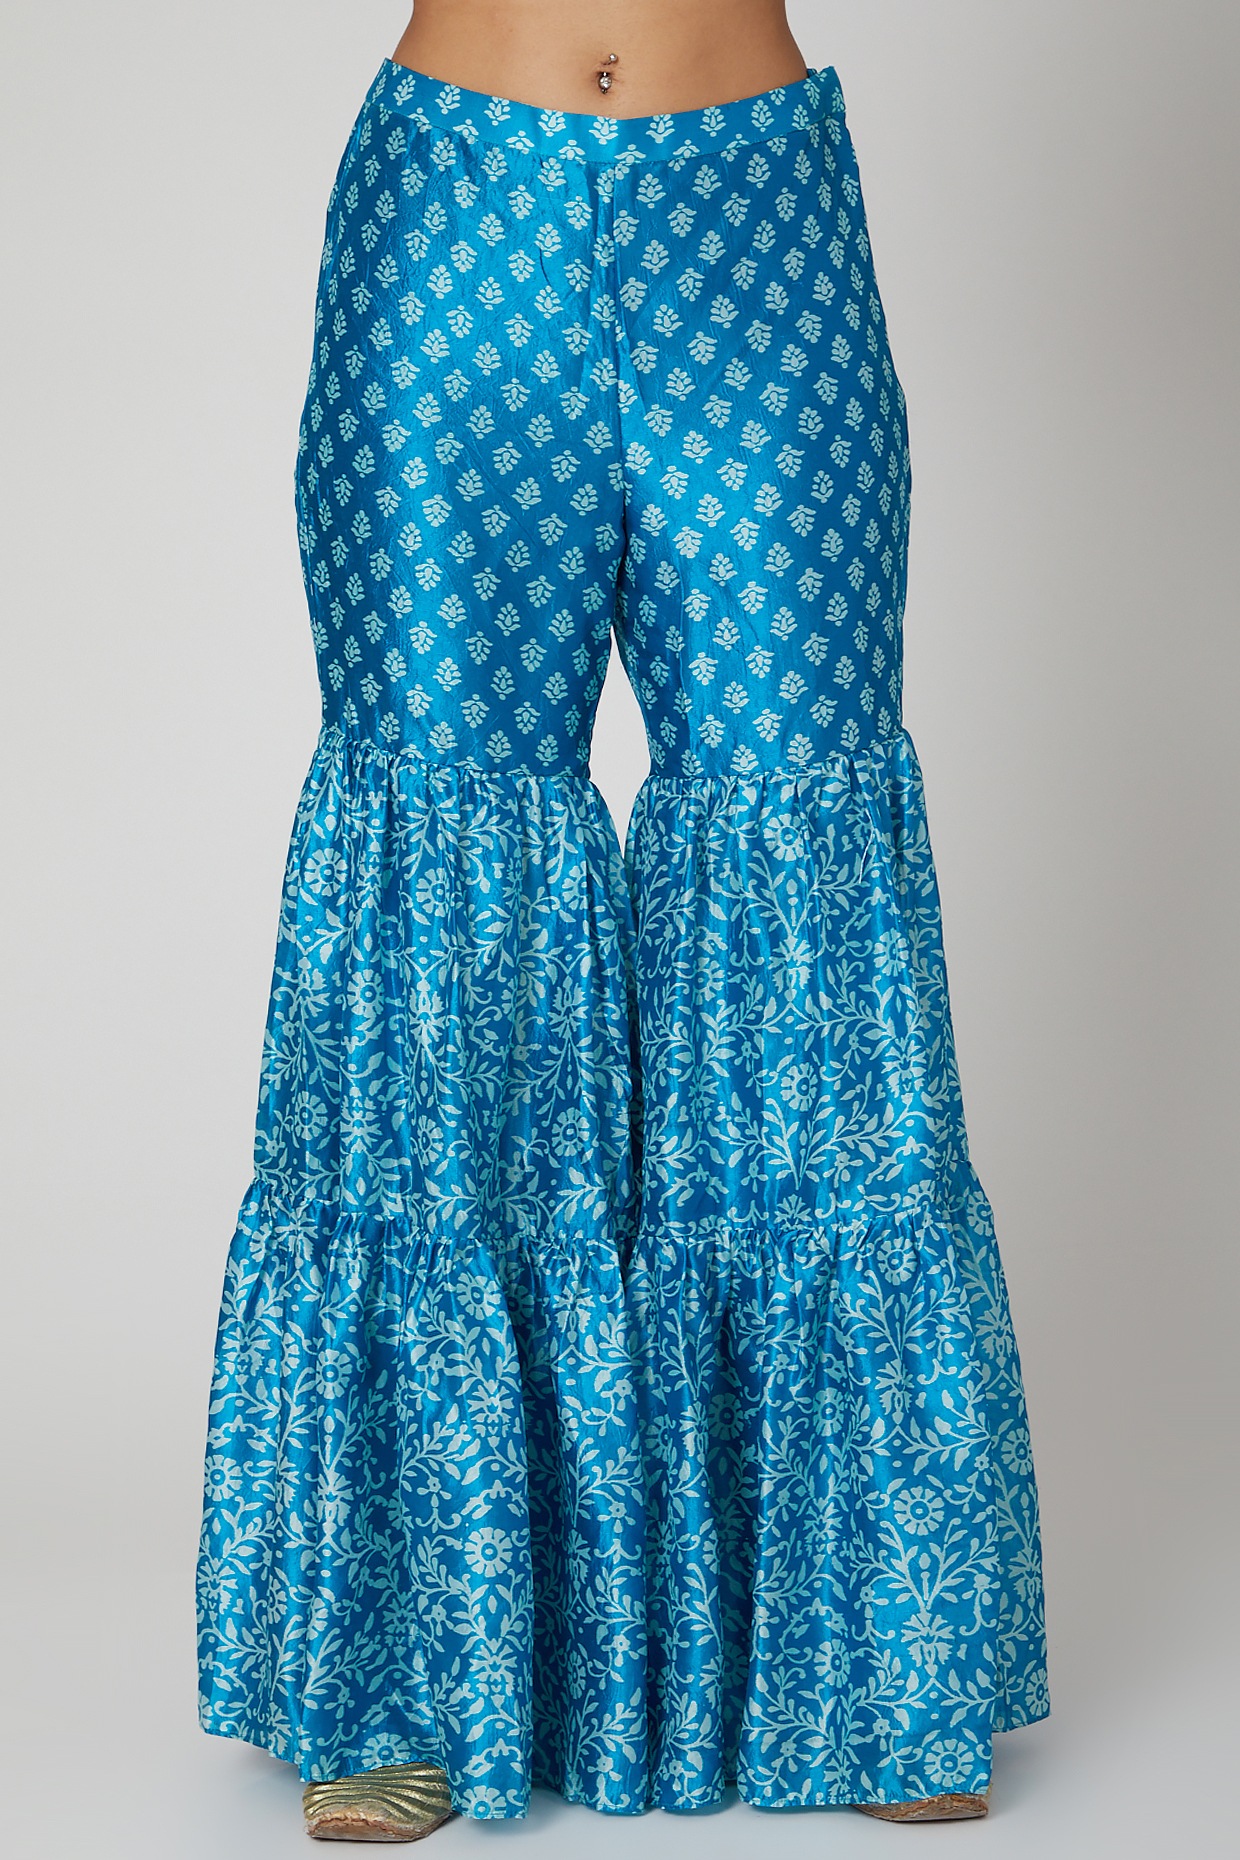 Deep Aurora Blue Printed Blouse With Cape and Sharara Pants – Awigna